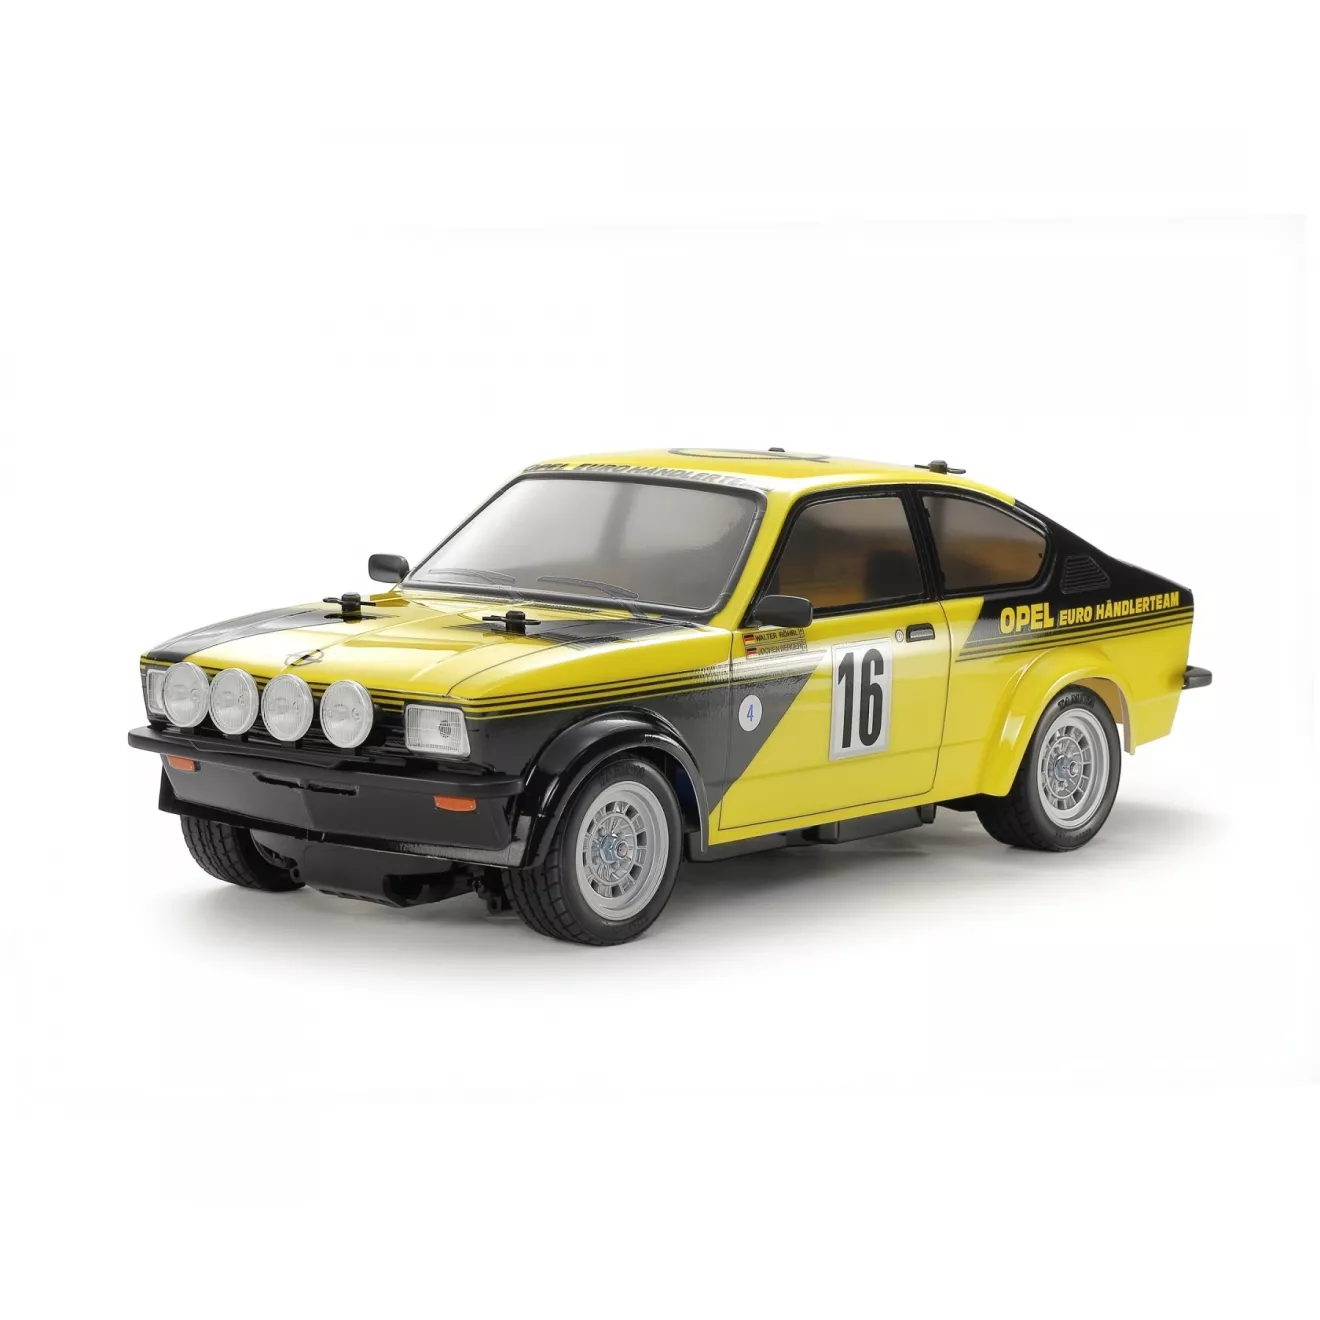 Tamiya 1:10 RC Opel Kadett GT/E Rallye MB-01 300058729 